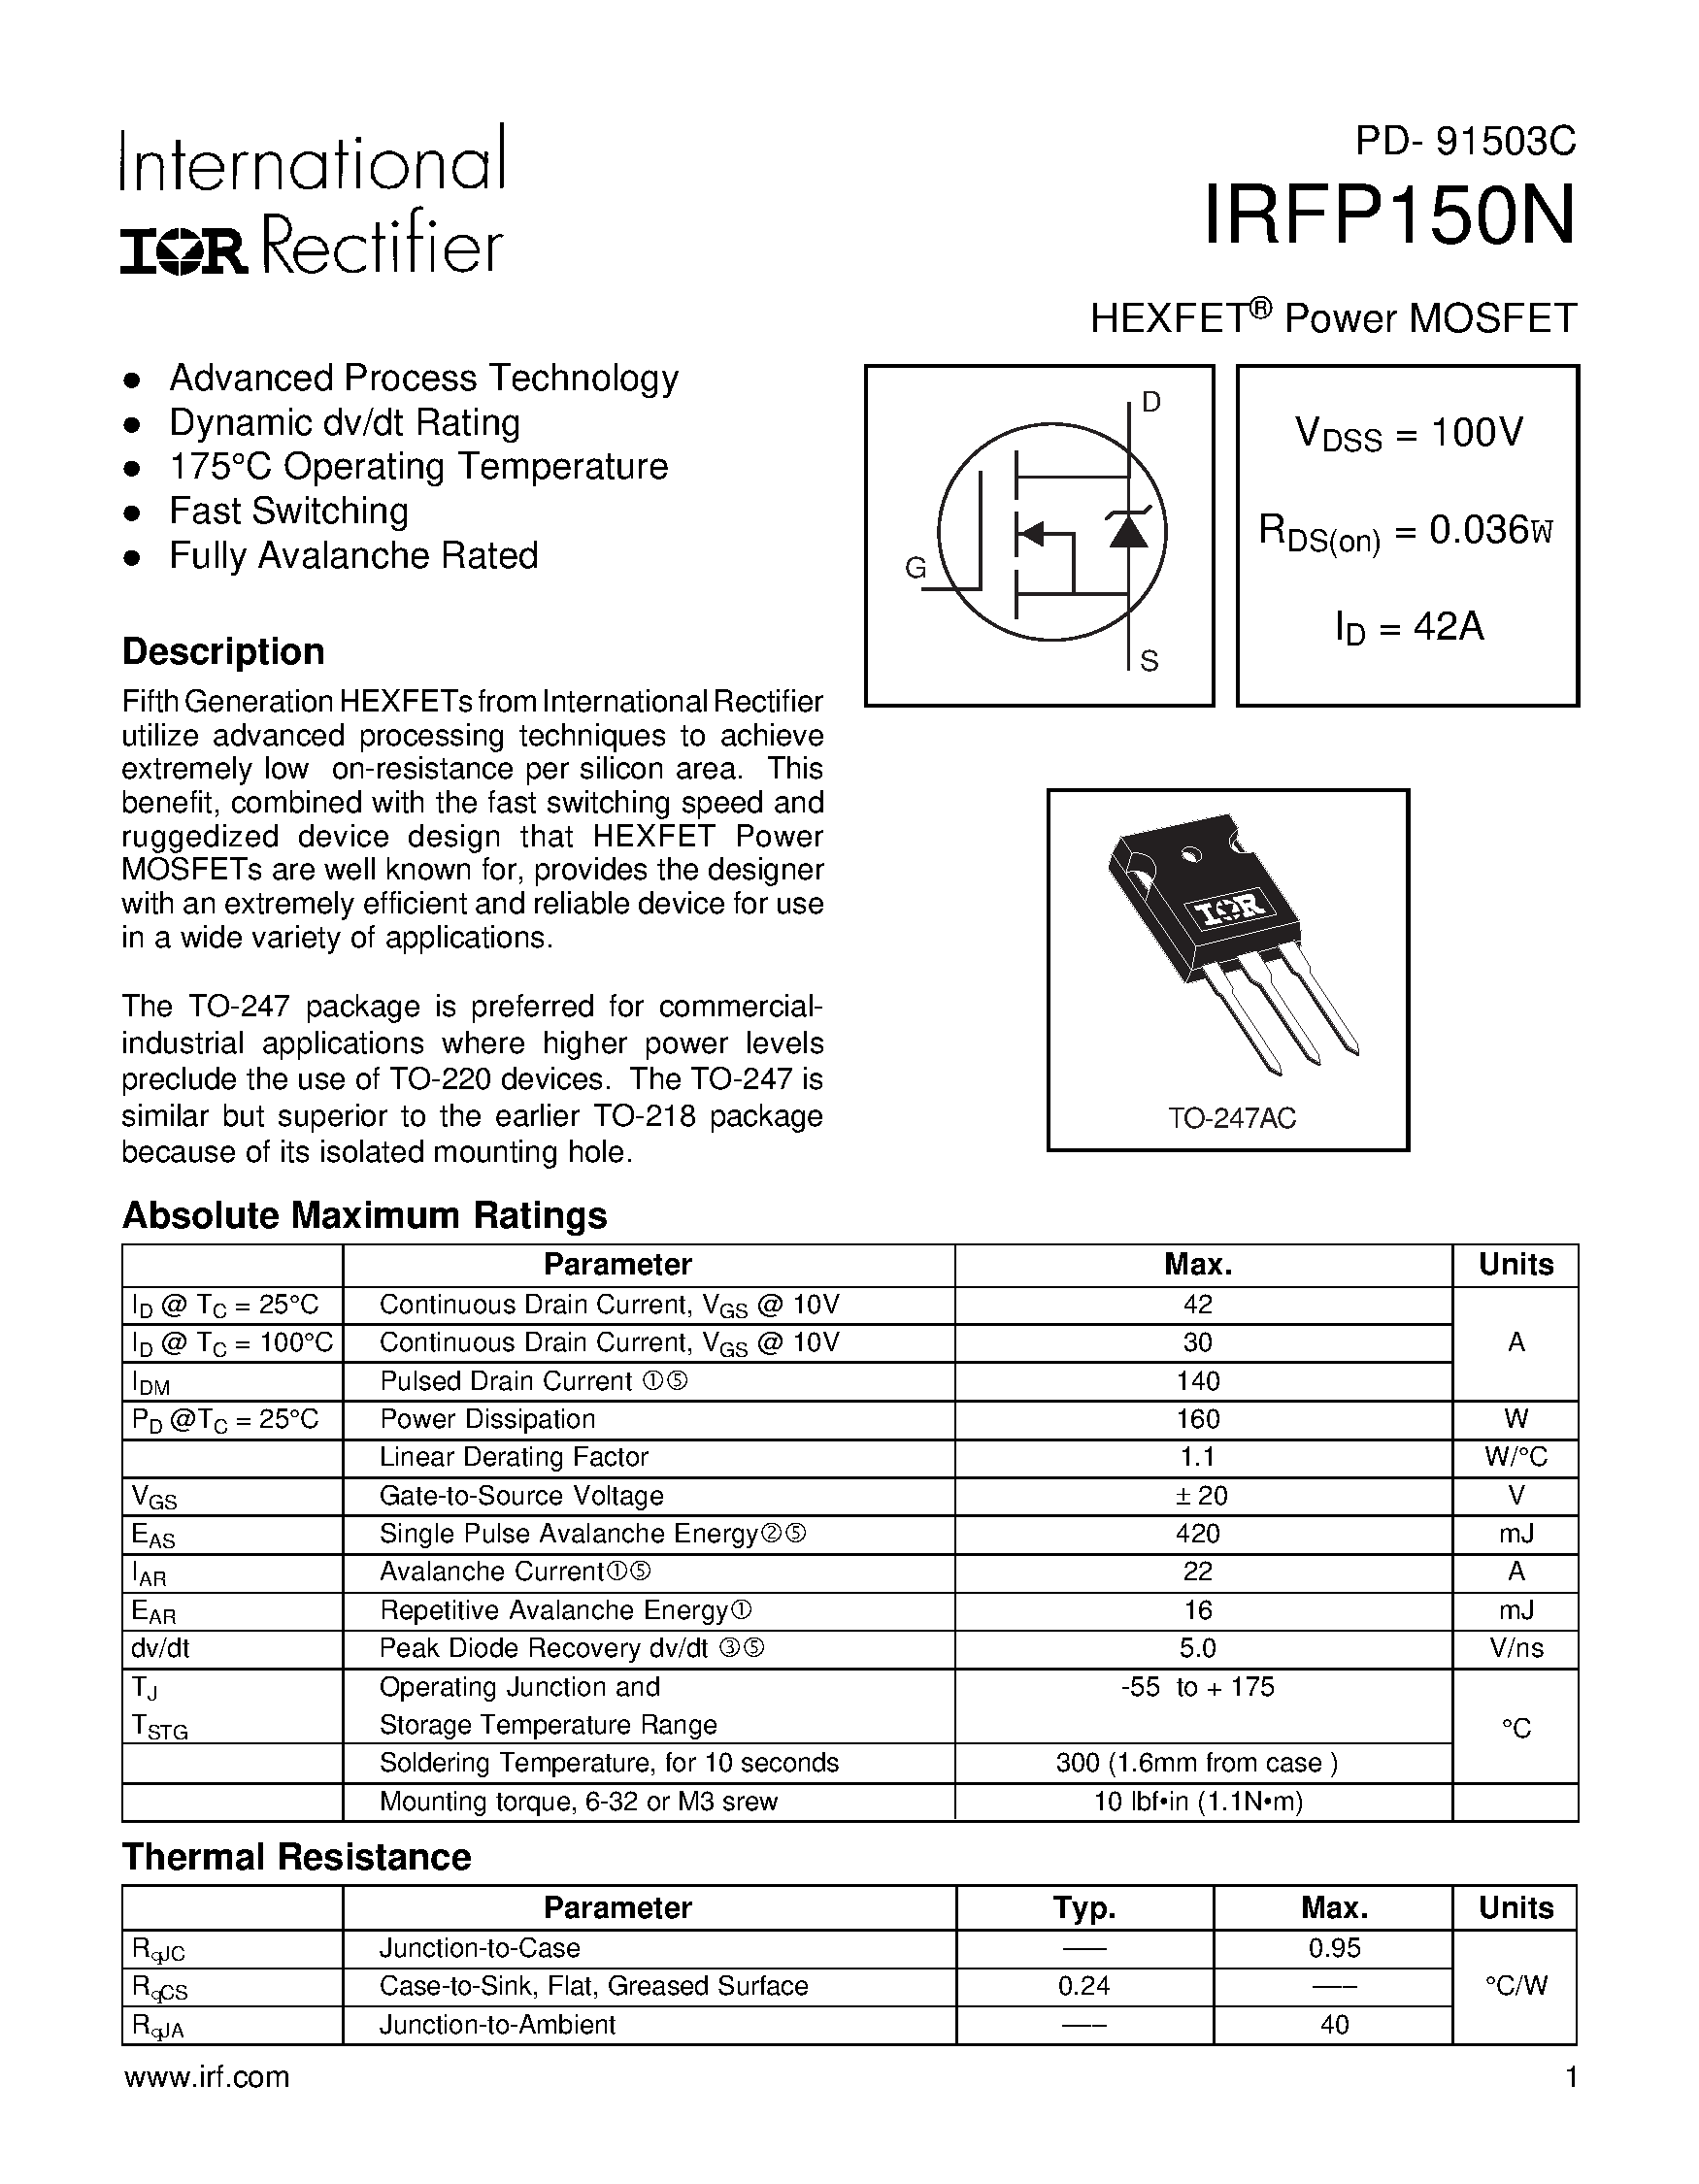 Даташит IRFP150N - Power MOSFET страница 1